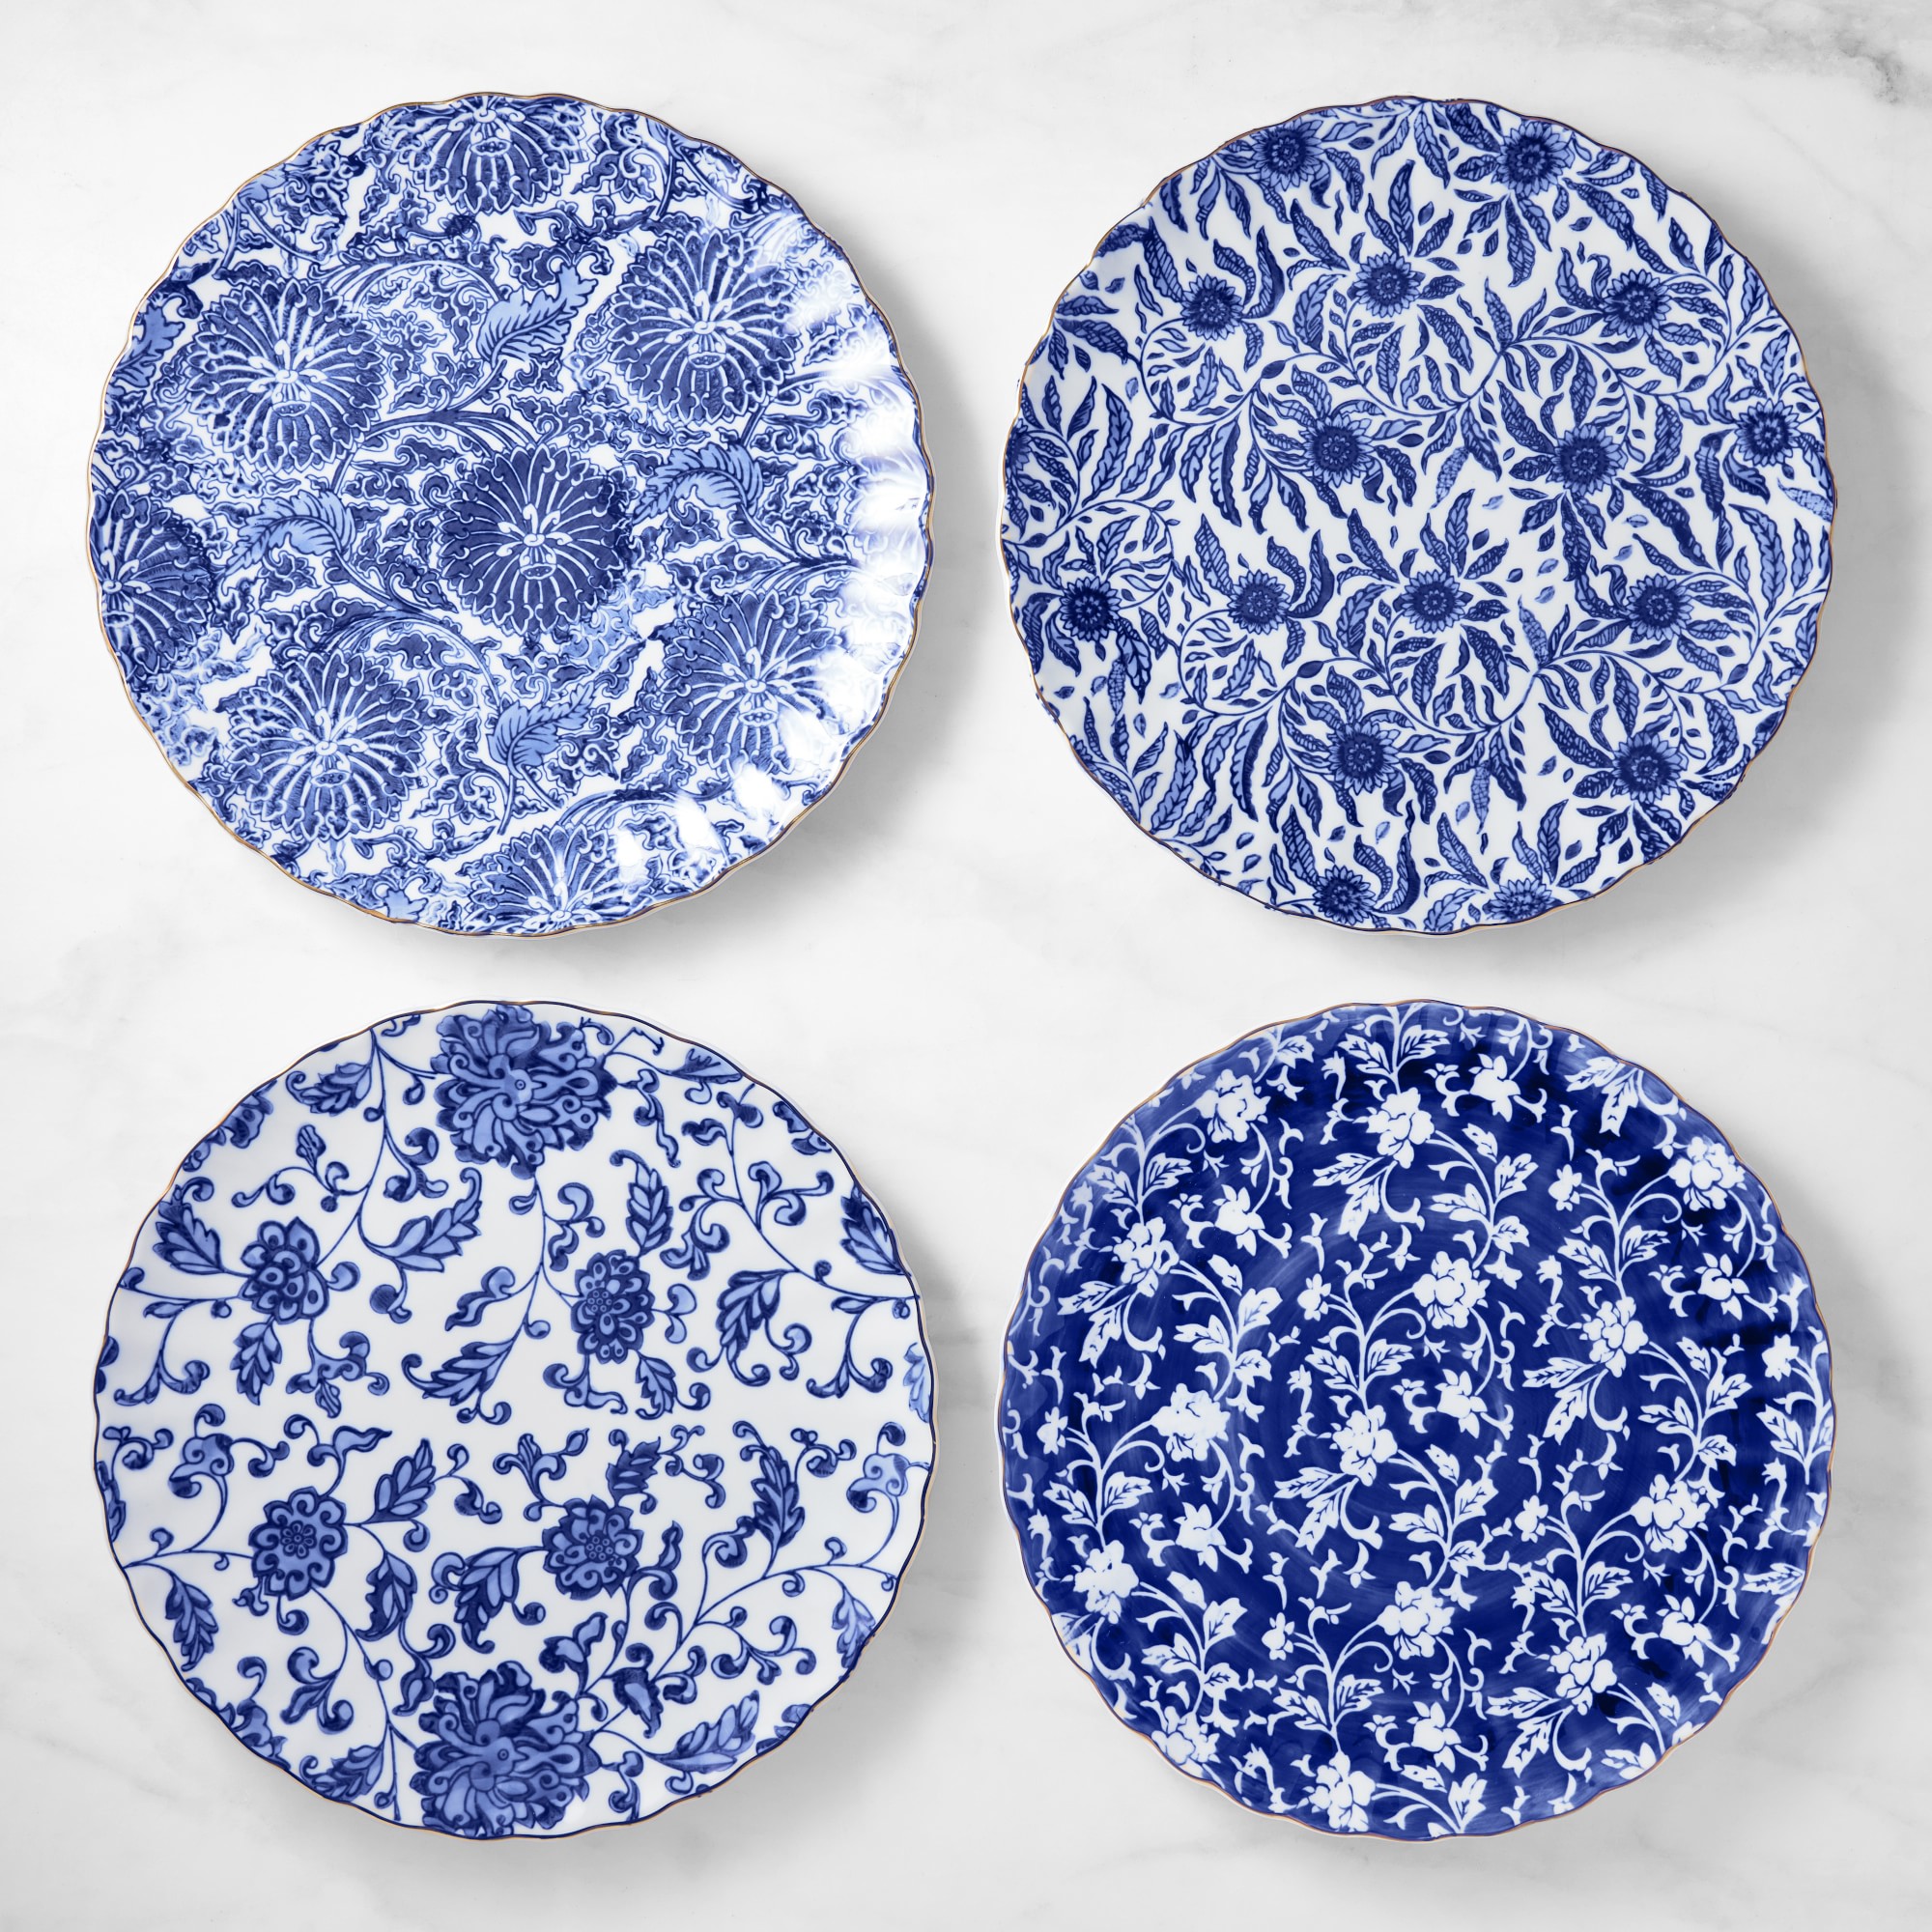 Marlo Thomas Dinner Plates, Set of 4